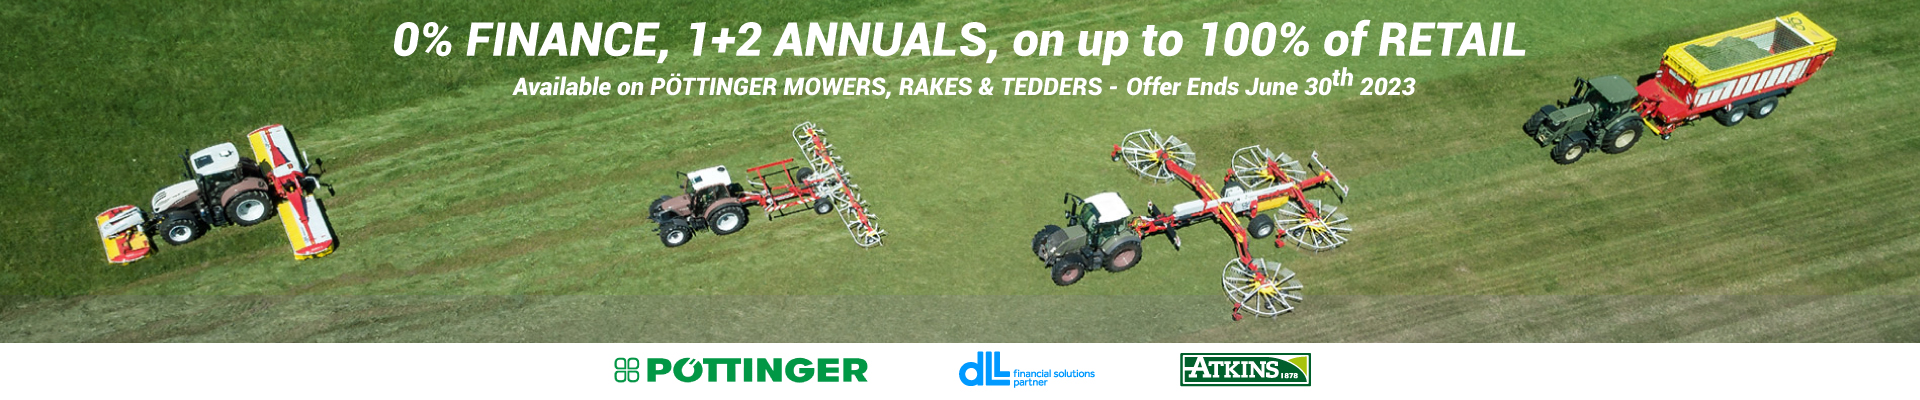 Pottinger Farm Machinery: Mowers, Tedders, Rakes - Finance Deal June 2023